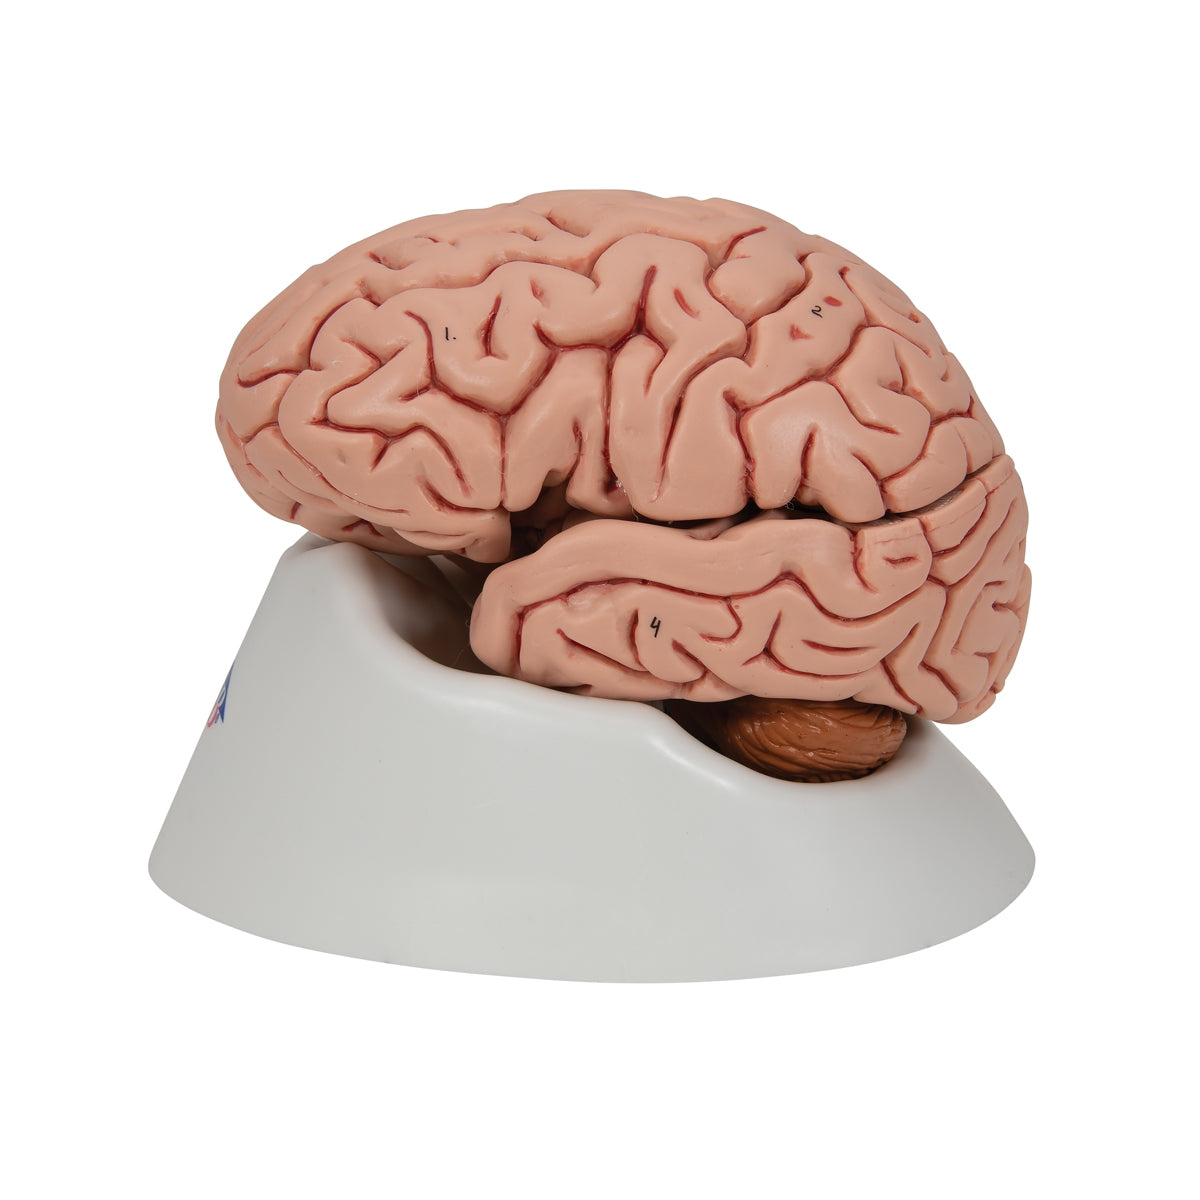 Classic Human Brain Model, 5 part